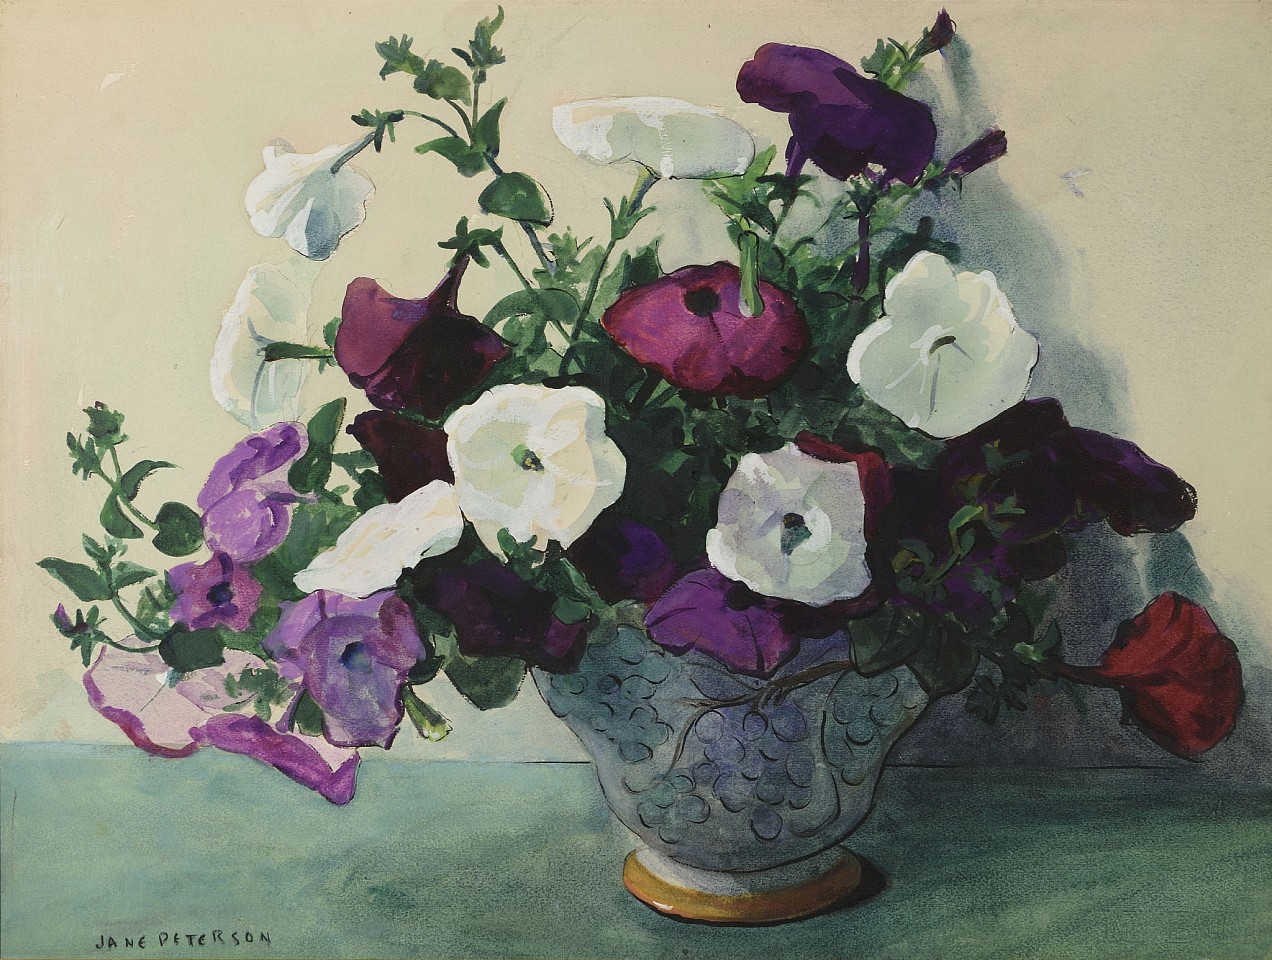 Jane Peterson, Floral Still Life
JP180801